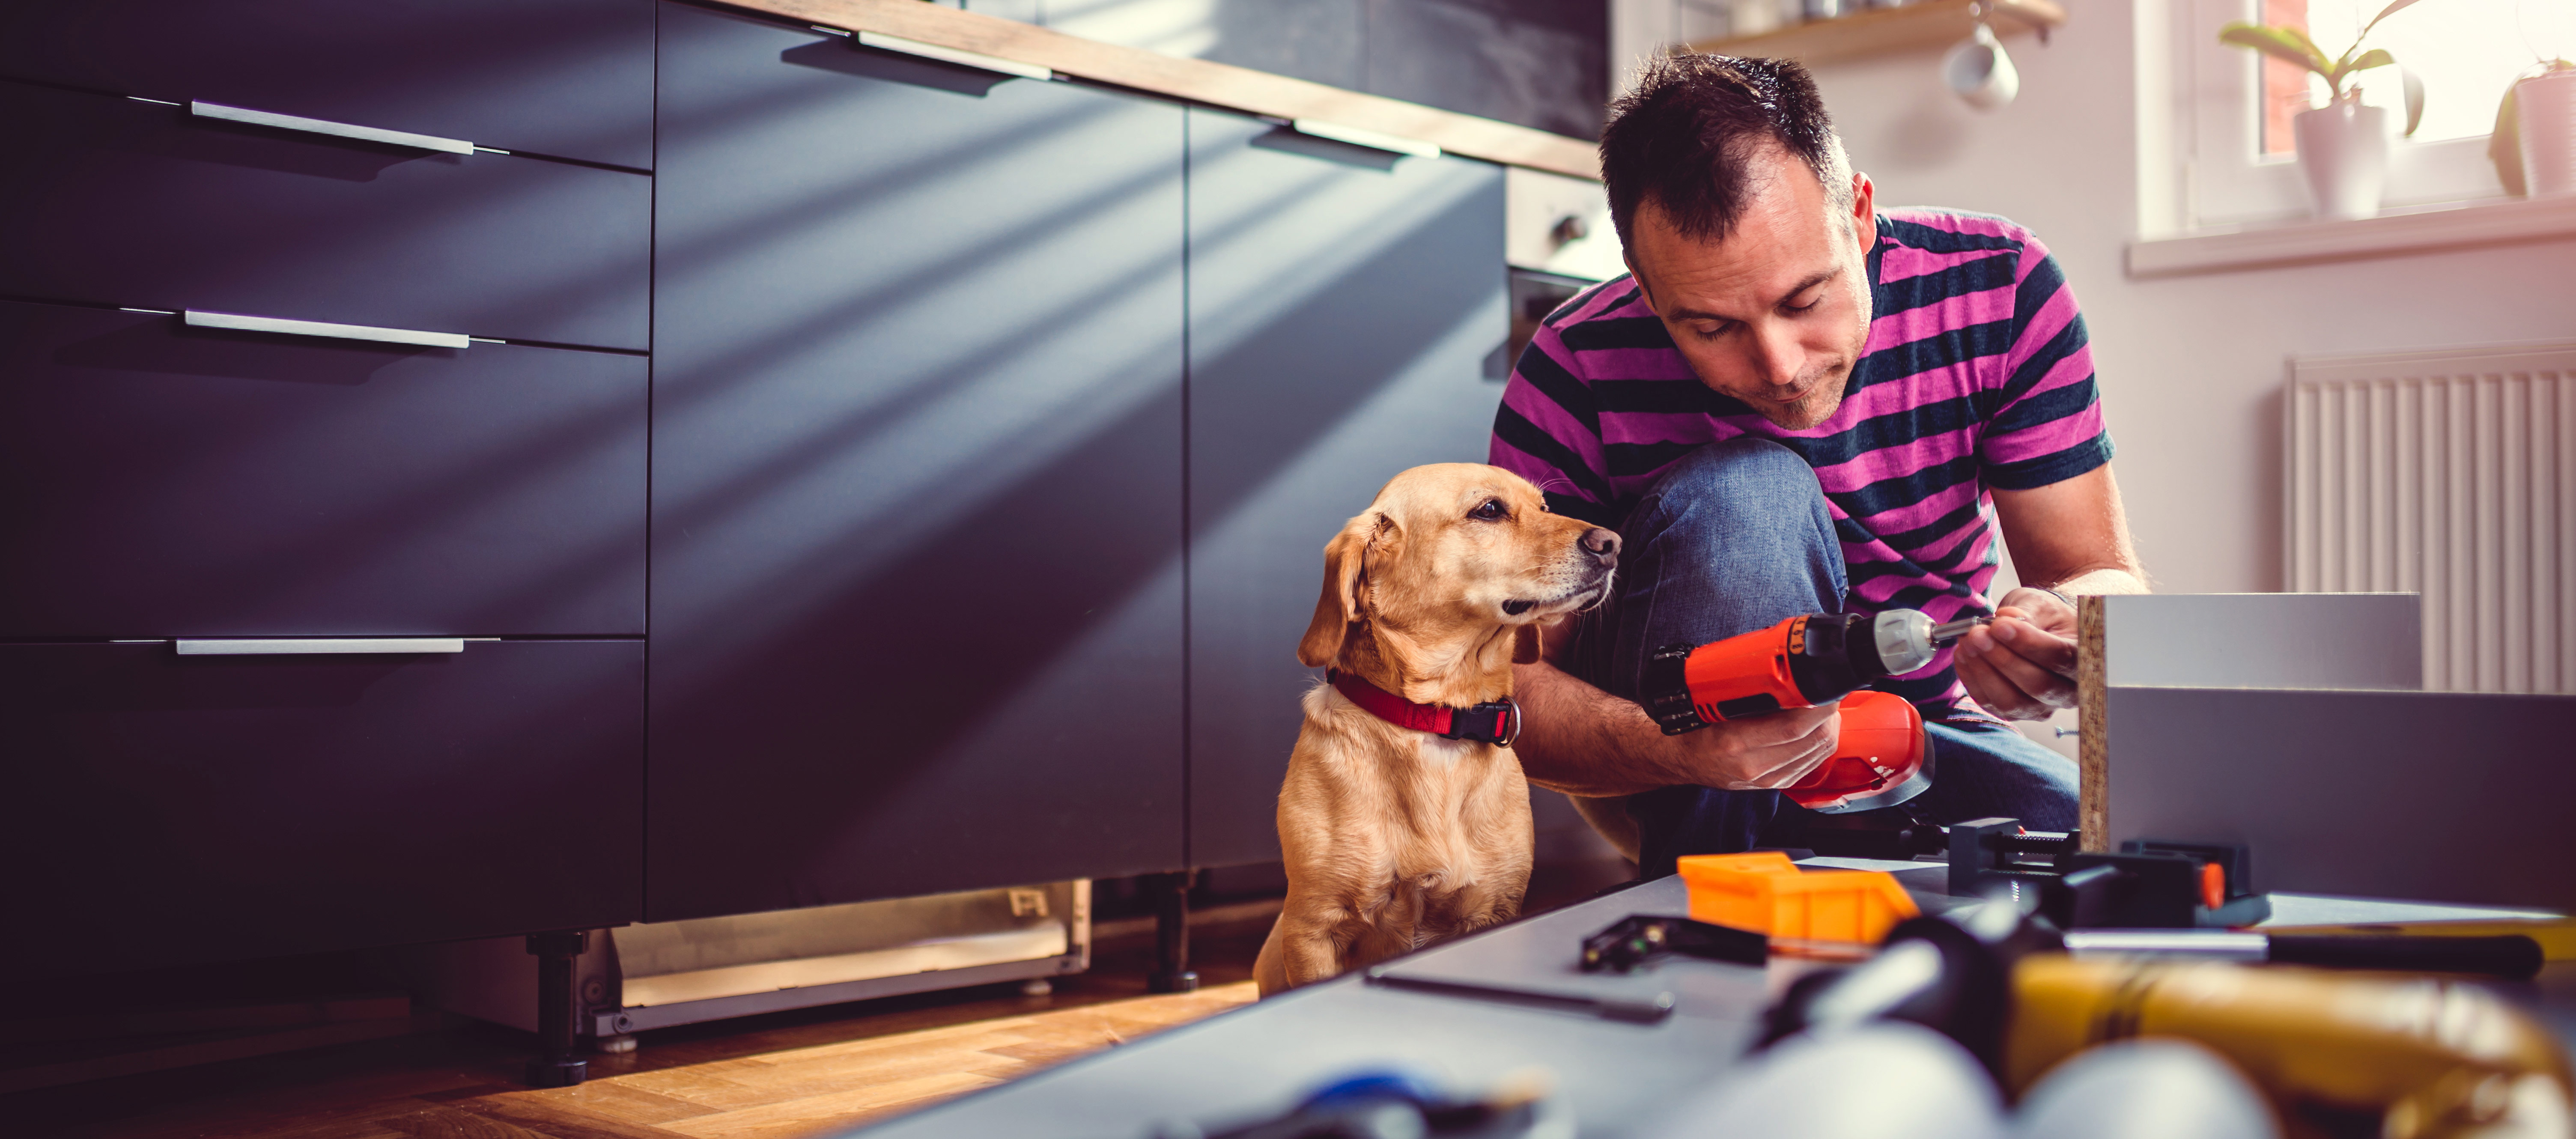 Buy to Let responsibilities concept: Man repairing kitchen cupboards